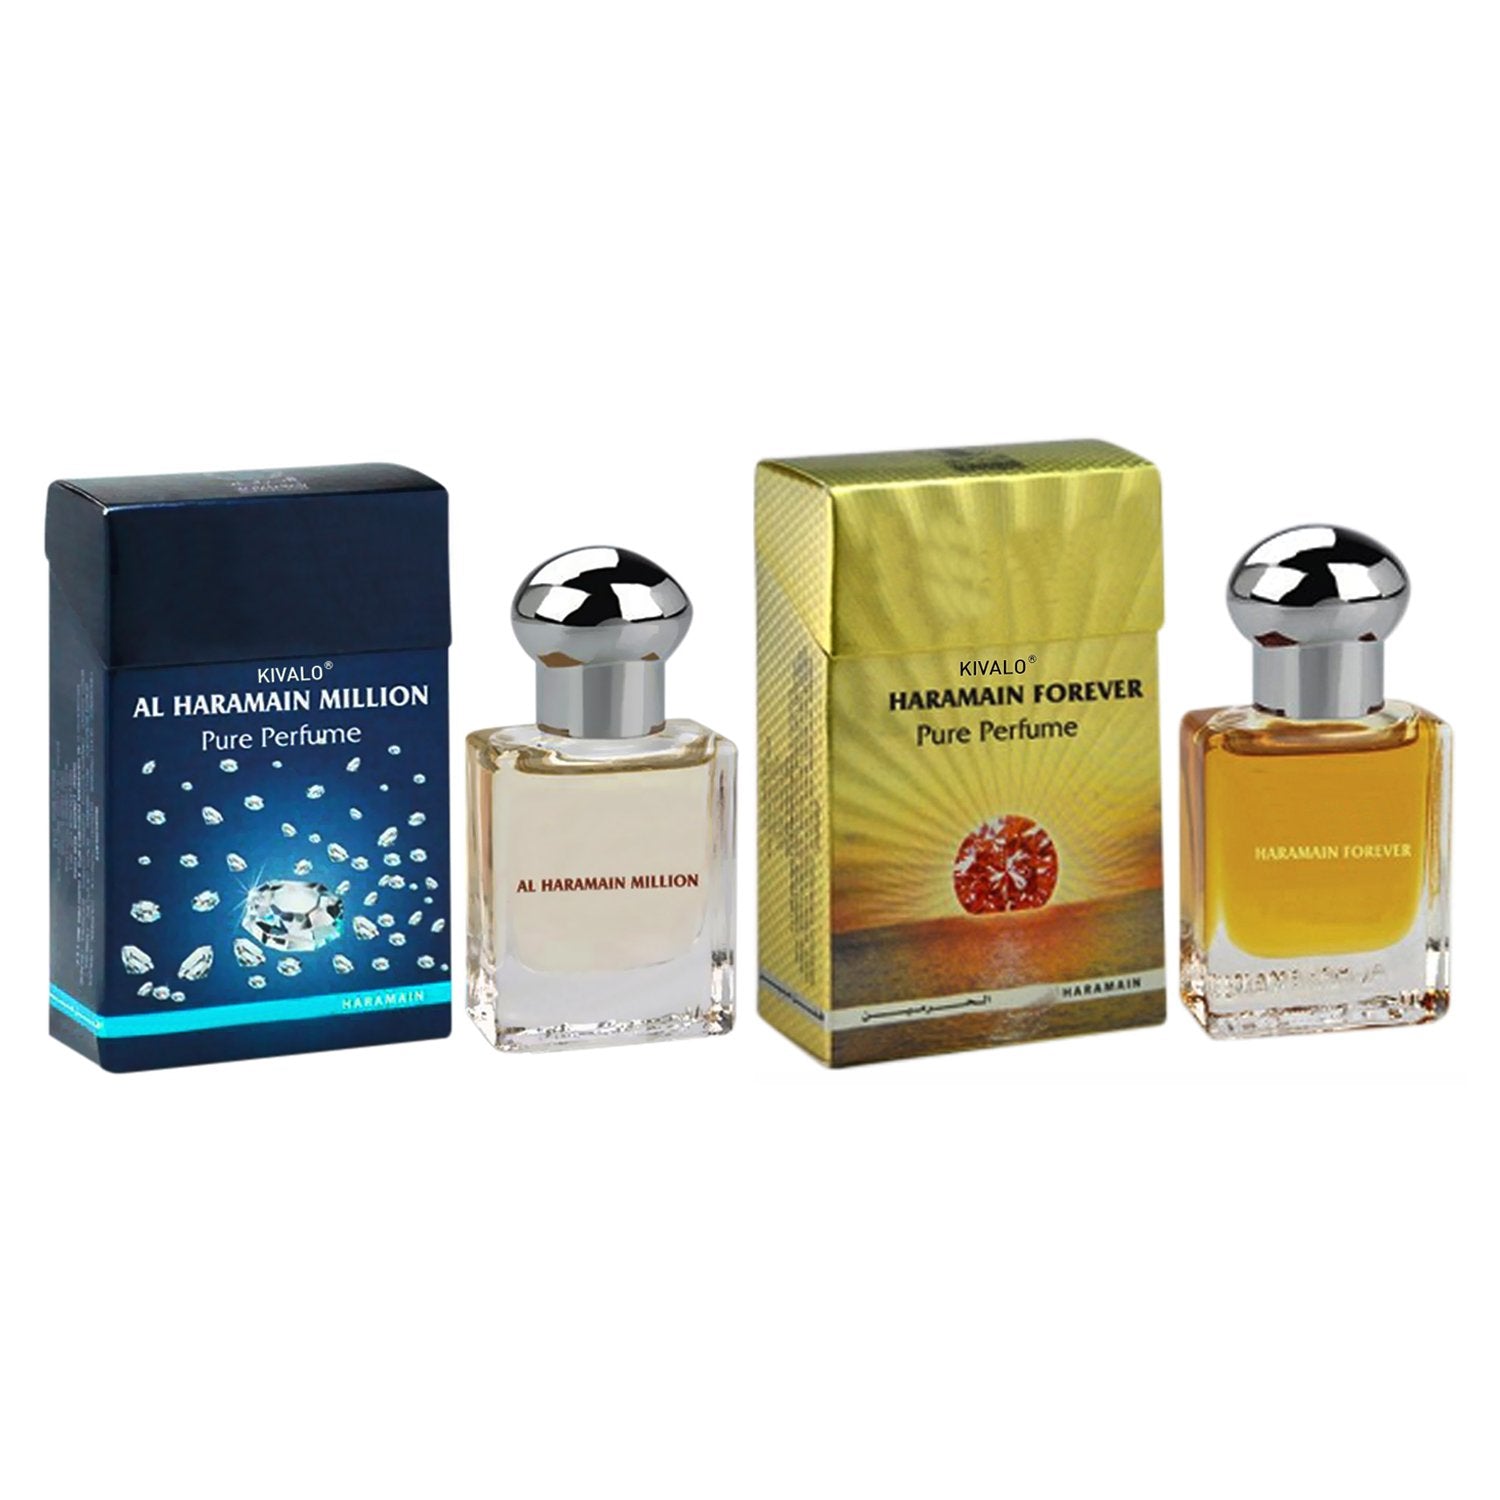 Al Haramain Million & Forever Fragrance Pure Original Roll on Perfume Oil Pack of 2 (Attar) - 2 x 15 ml